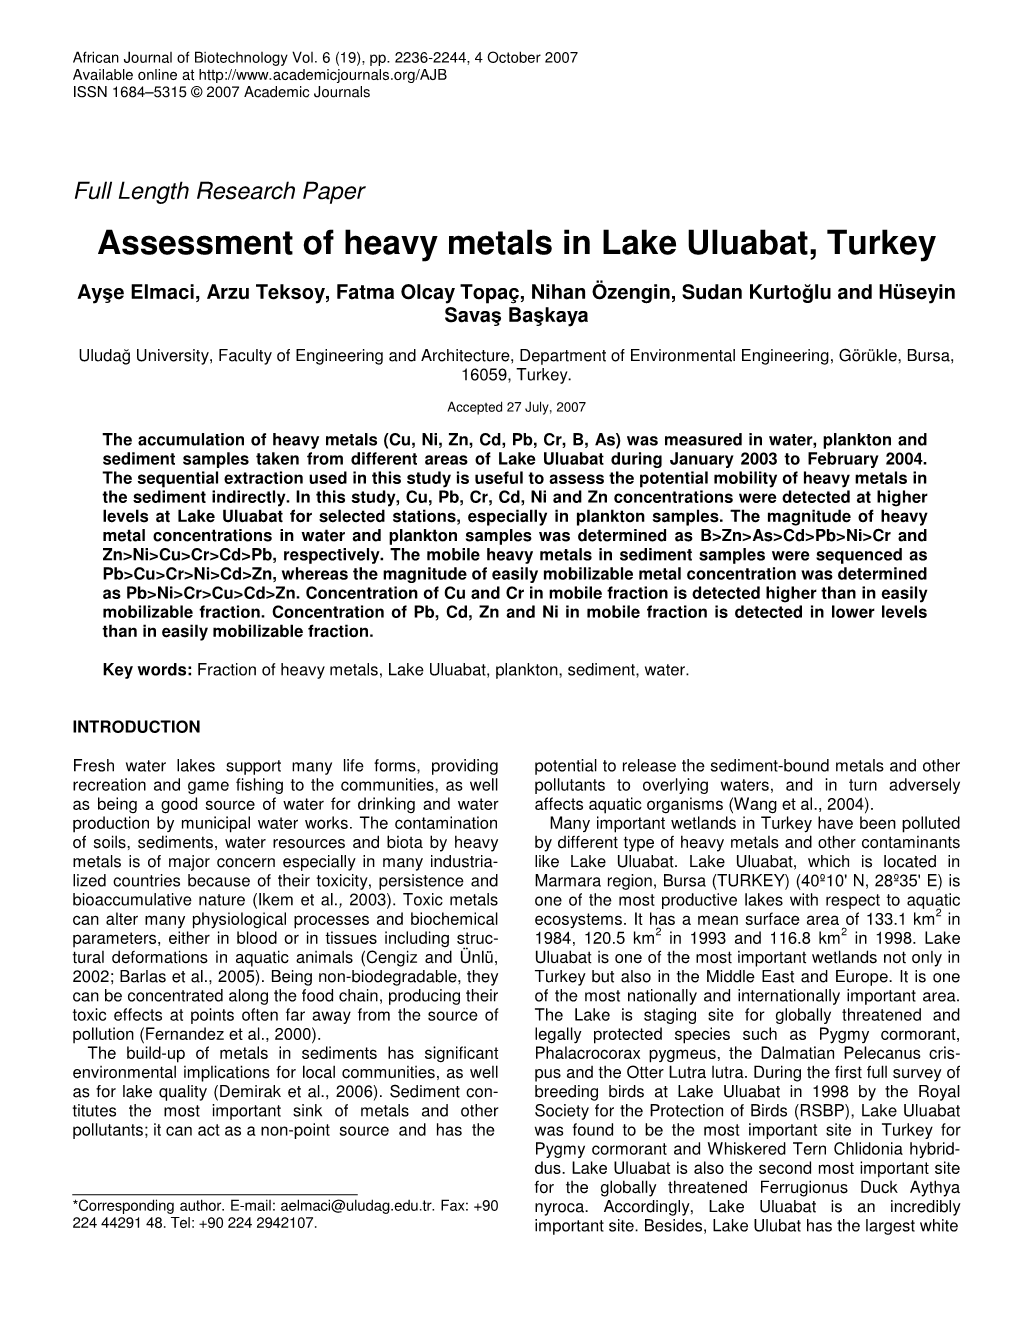 Assessment of Heavy Metals in Lake Uluabat, Turkey